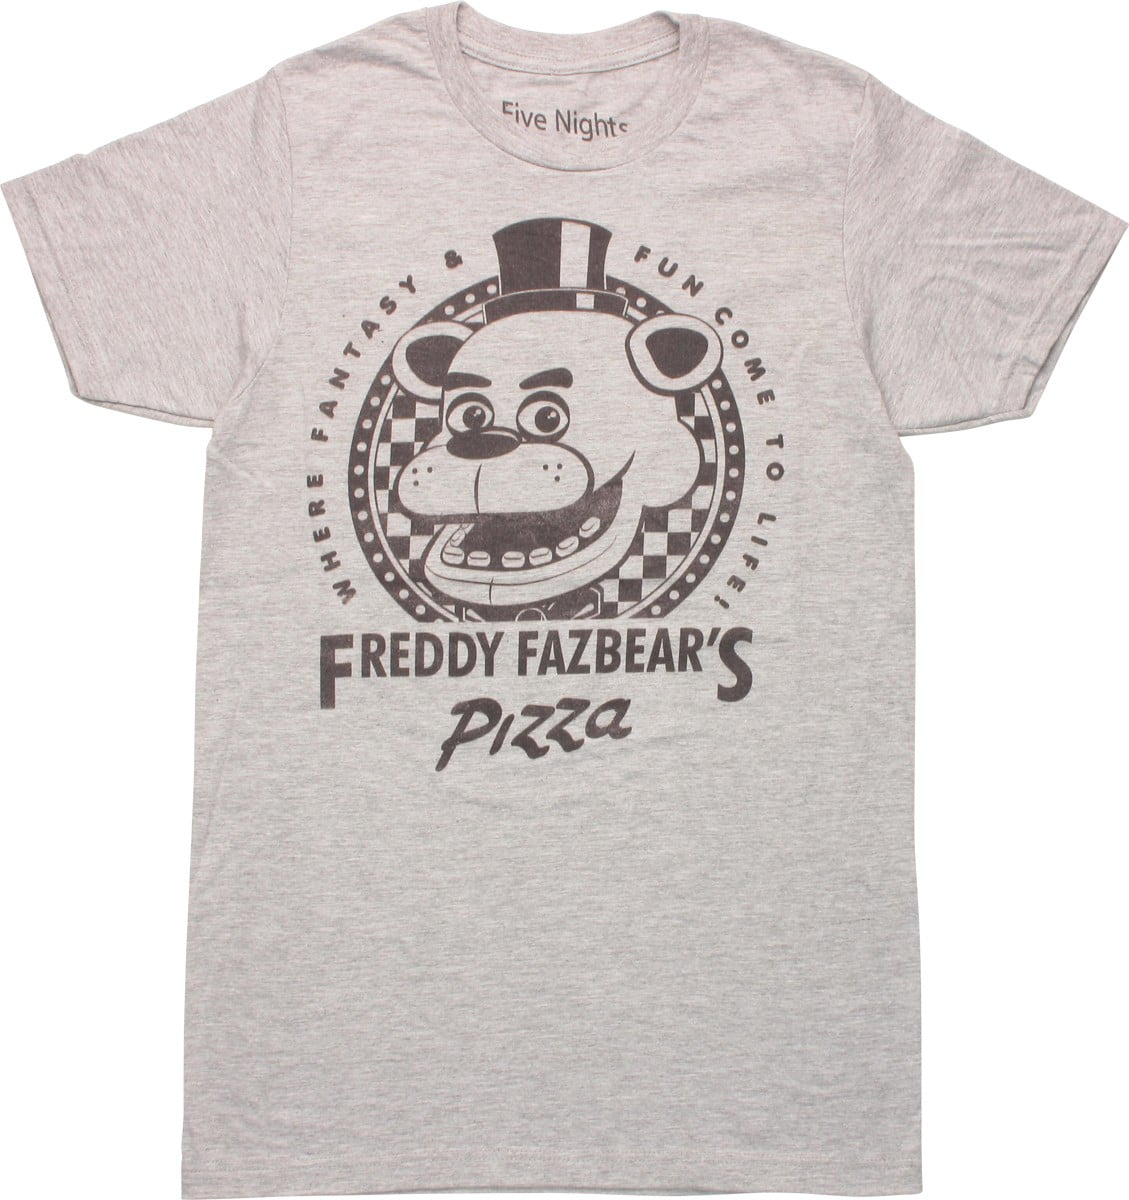 Five Nights At Freddy's Pizza Grey Boys Kids T-Shirt Top